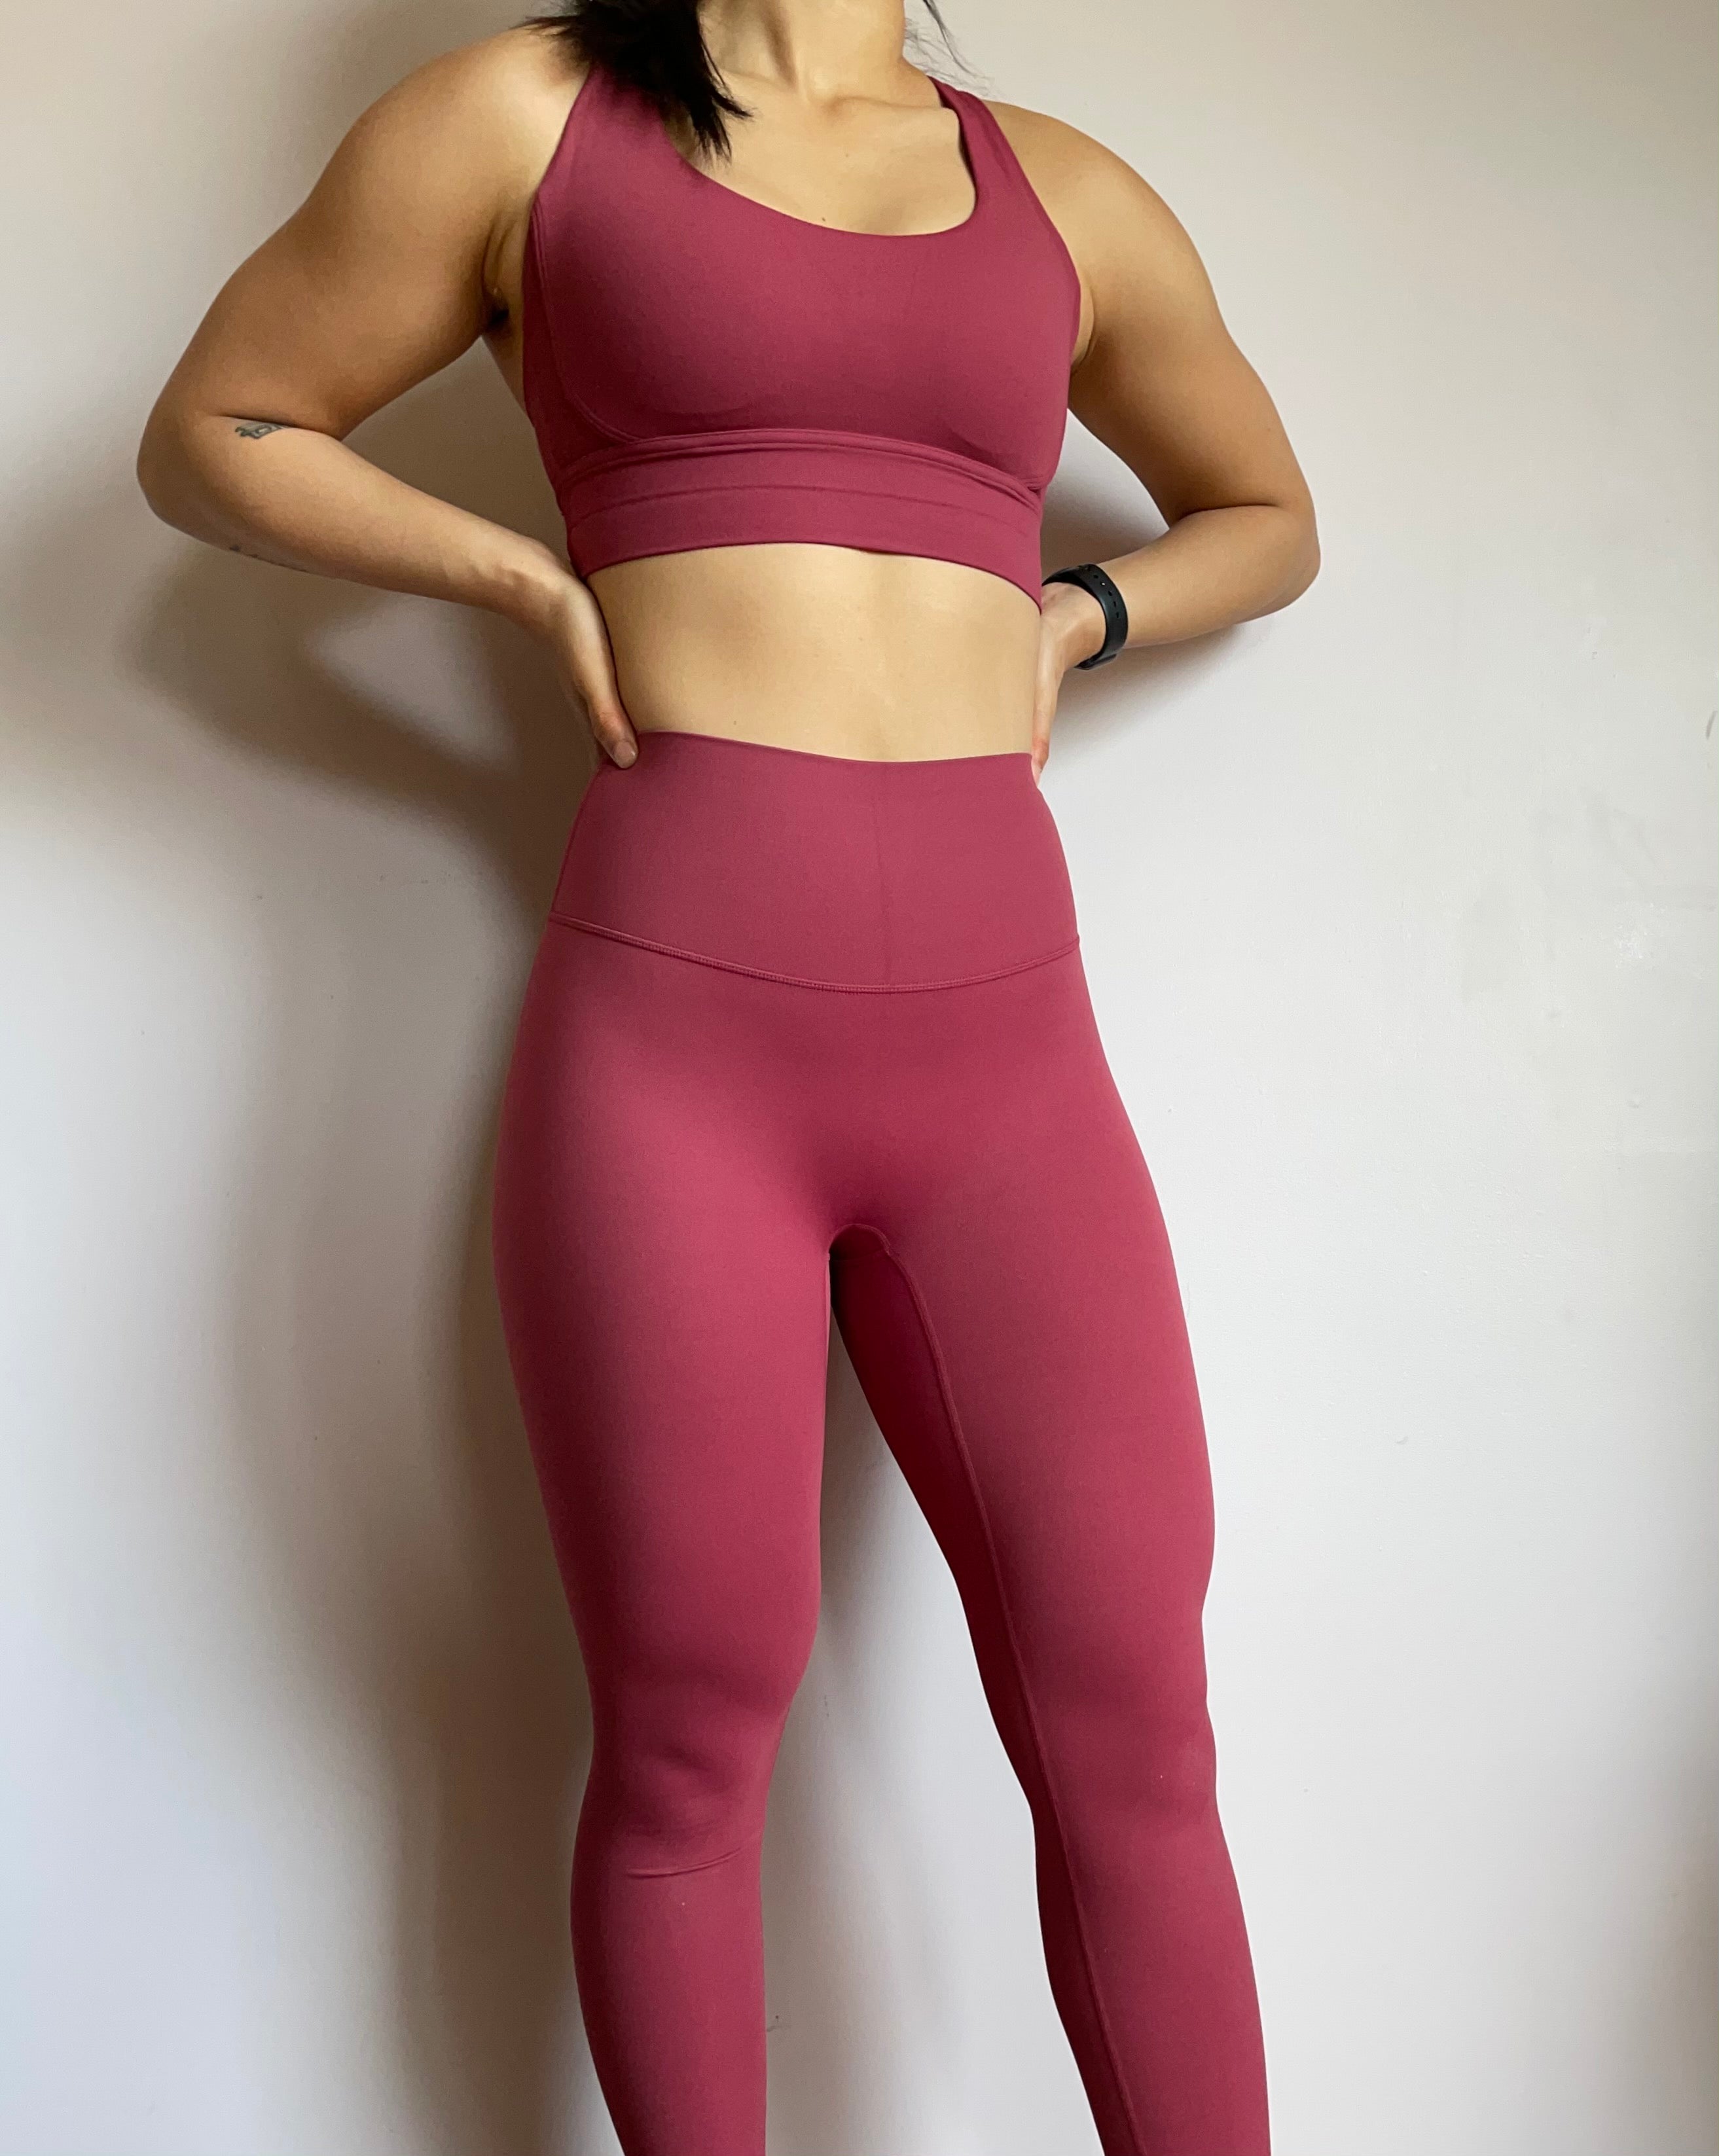 Women's pink leggings - British made by Ruby Fury